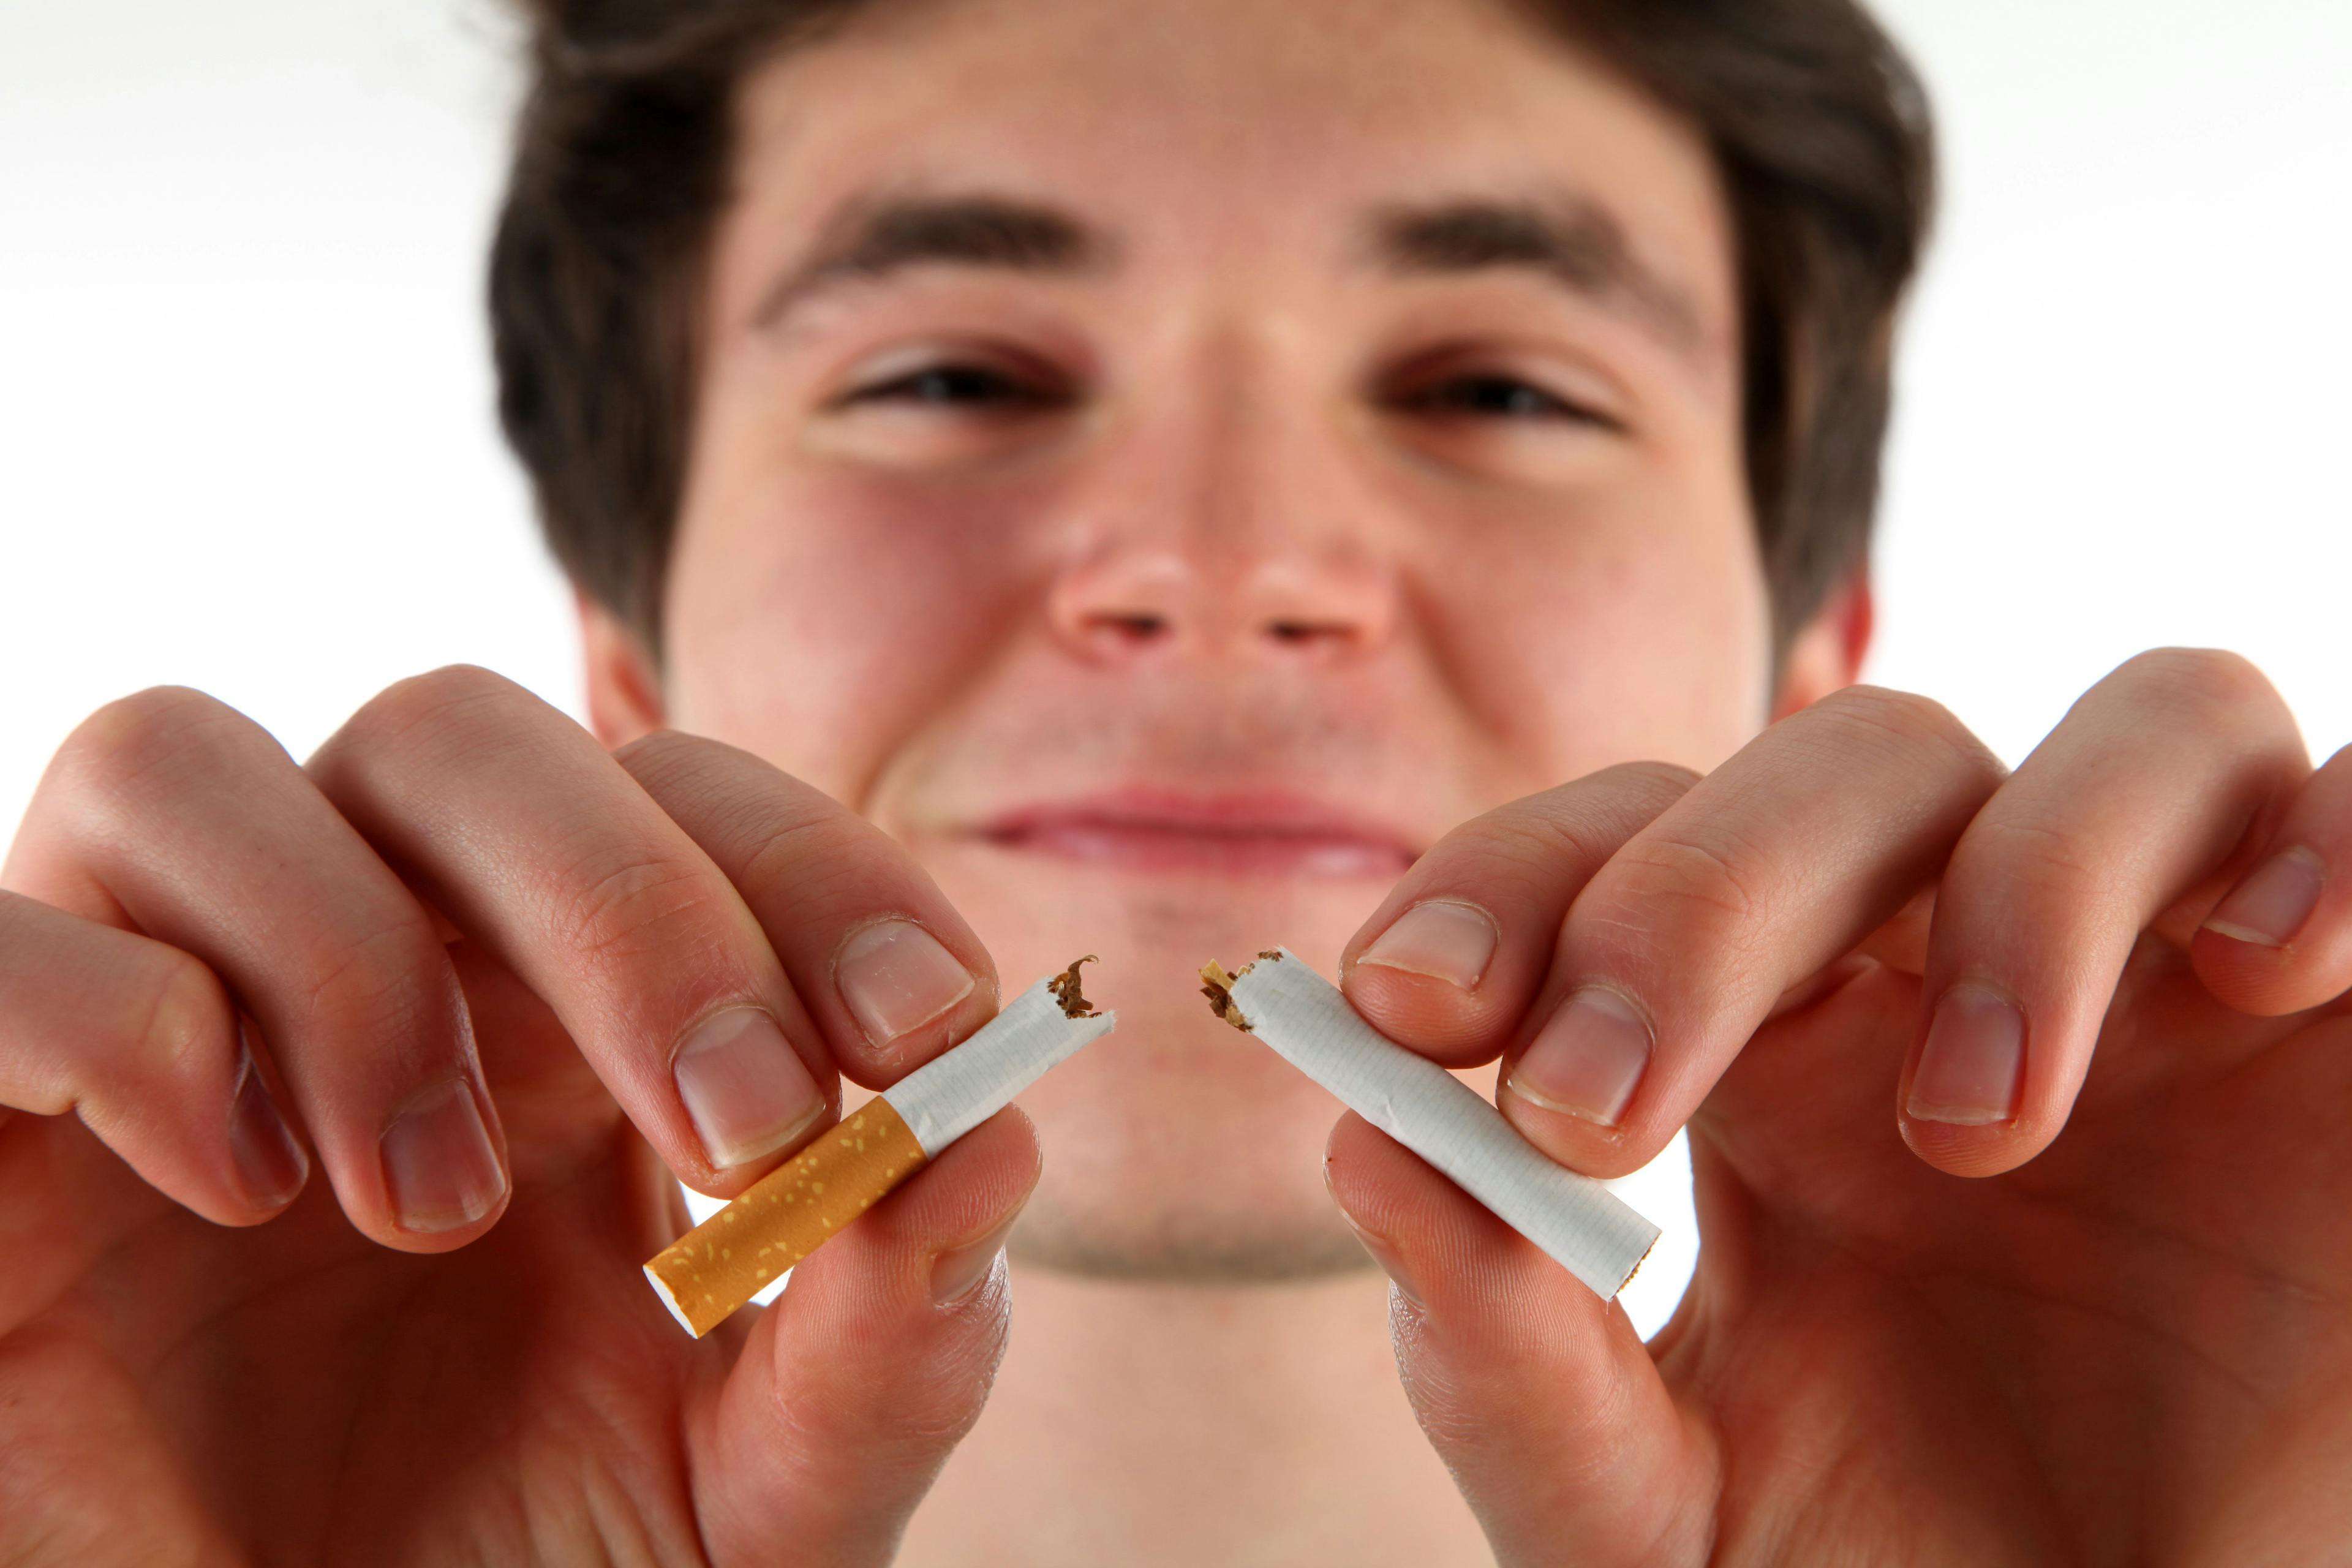 FDA commits to campaign to prevent future smokers